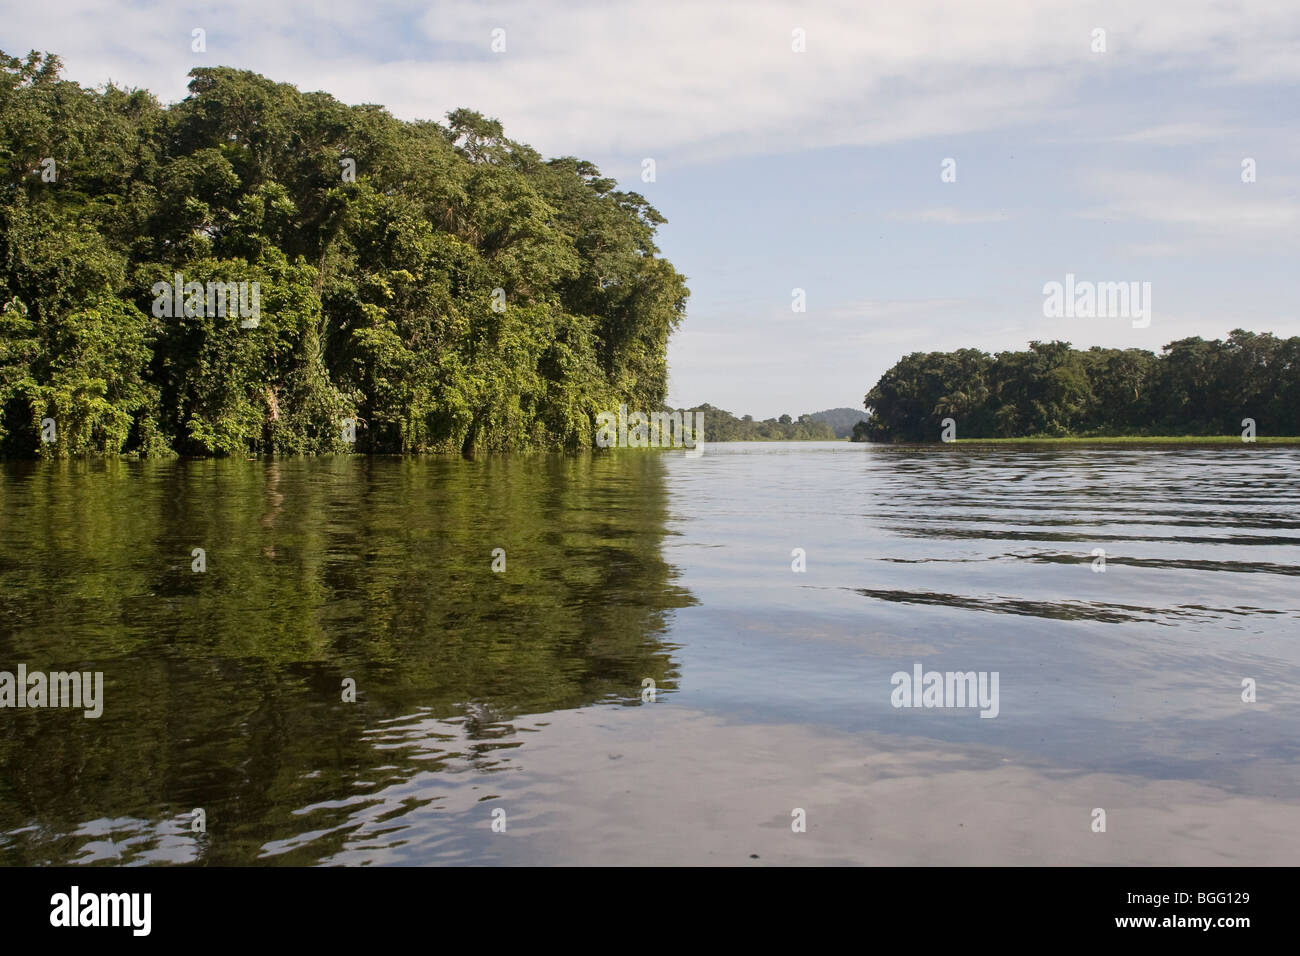 Slow-moving river alongside lowland tropical rainforest. Photographed ...